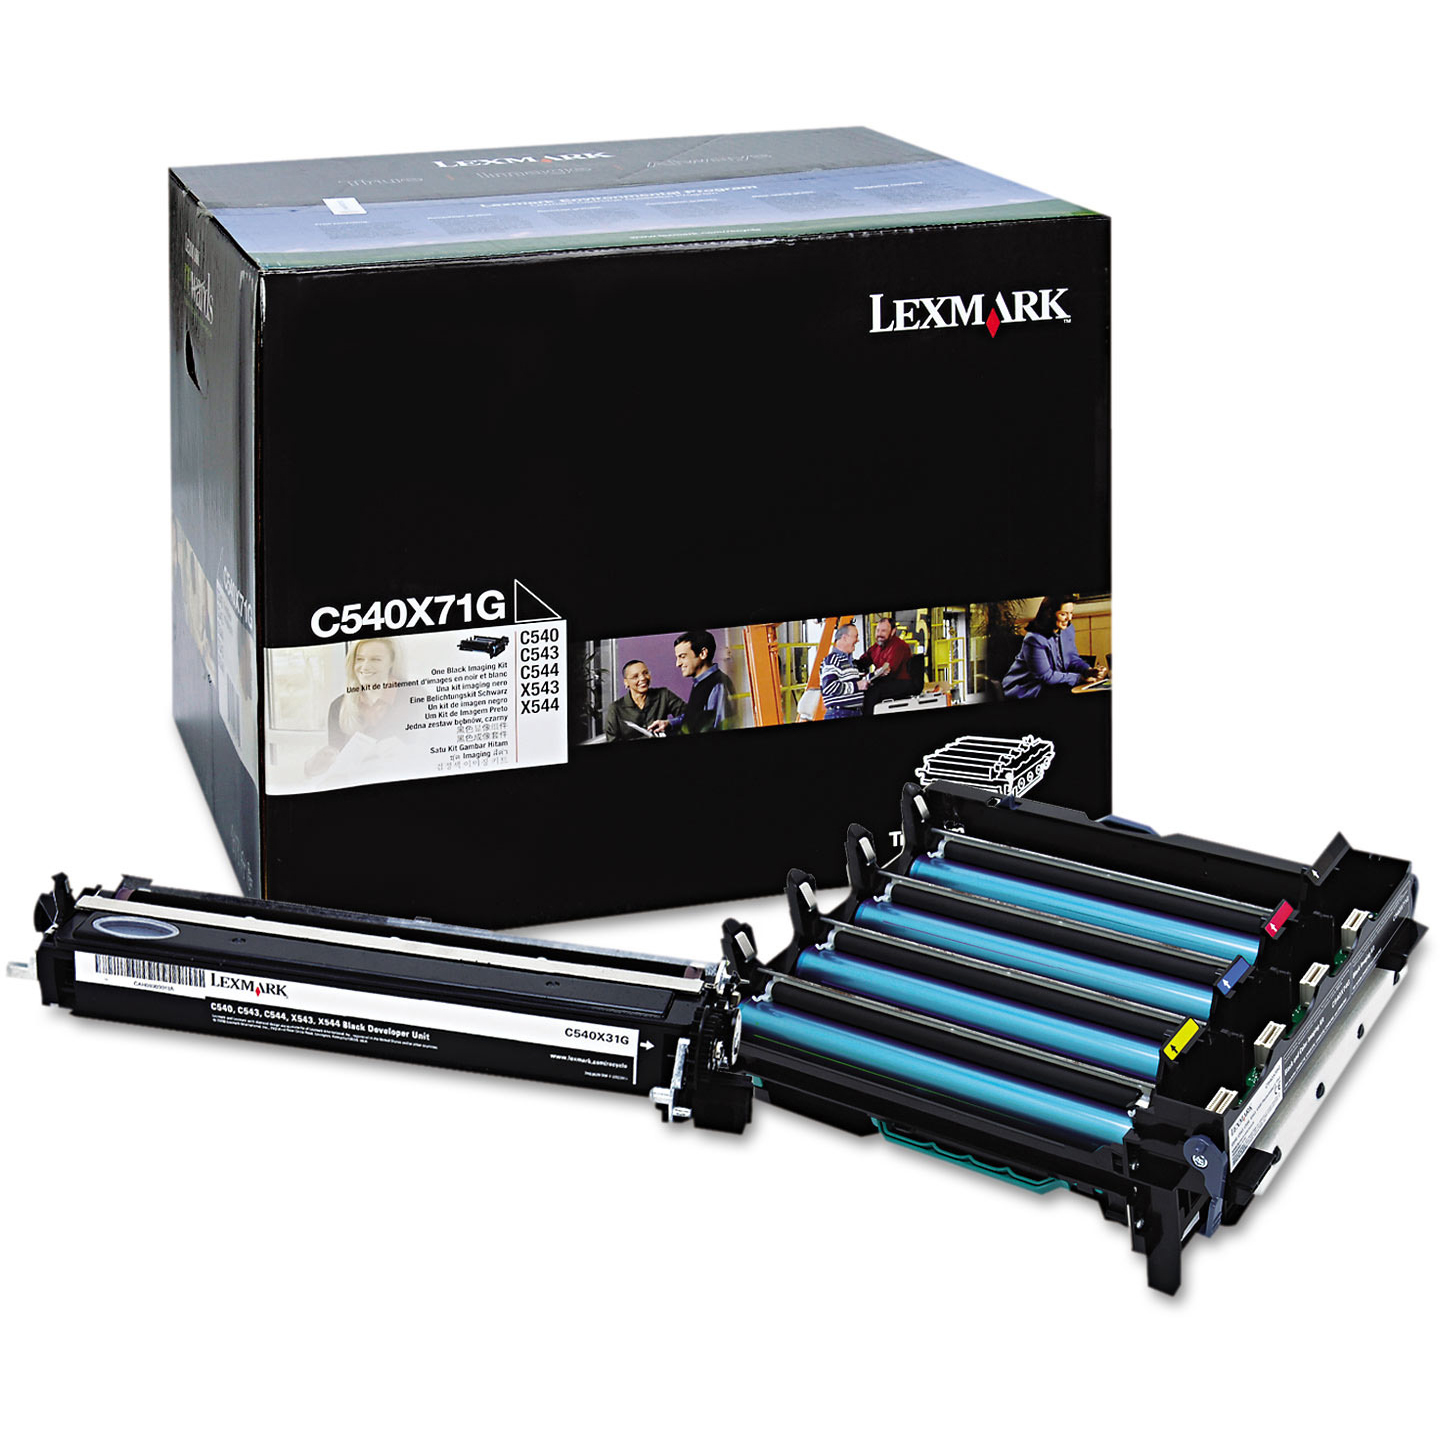 Original Lexmark C540X71G Black Imaging Kit (C540X71G)